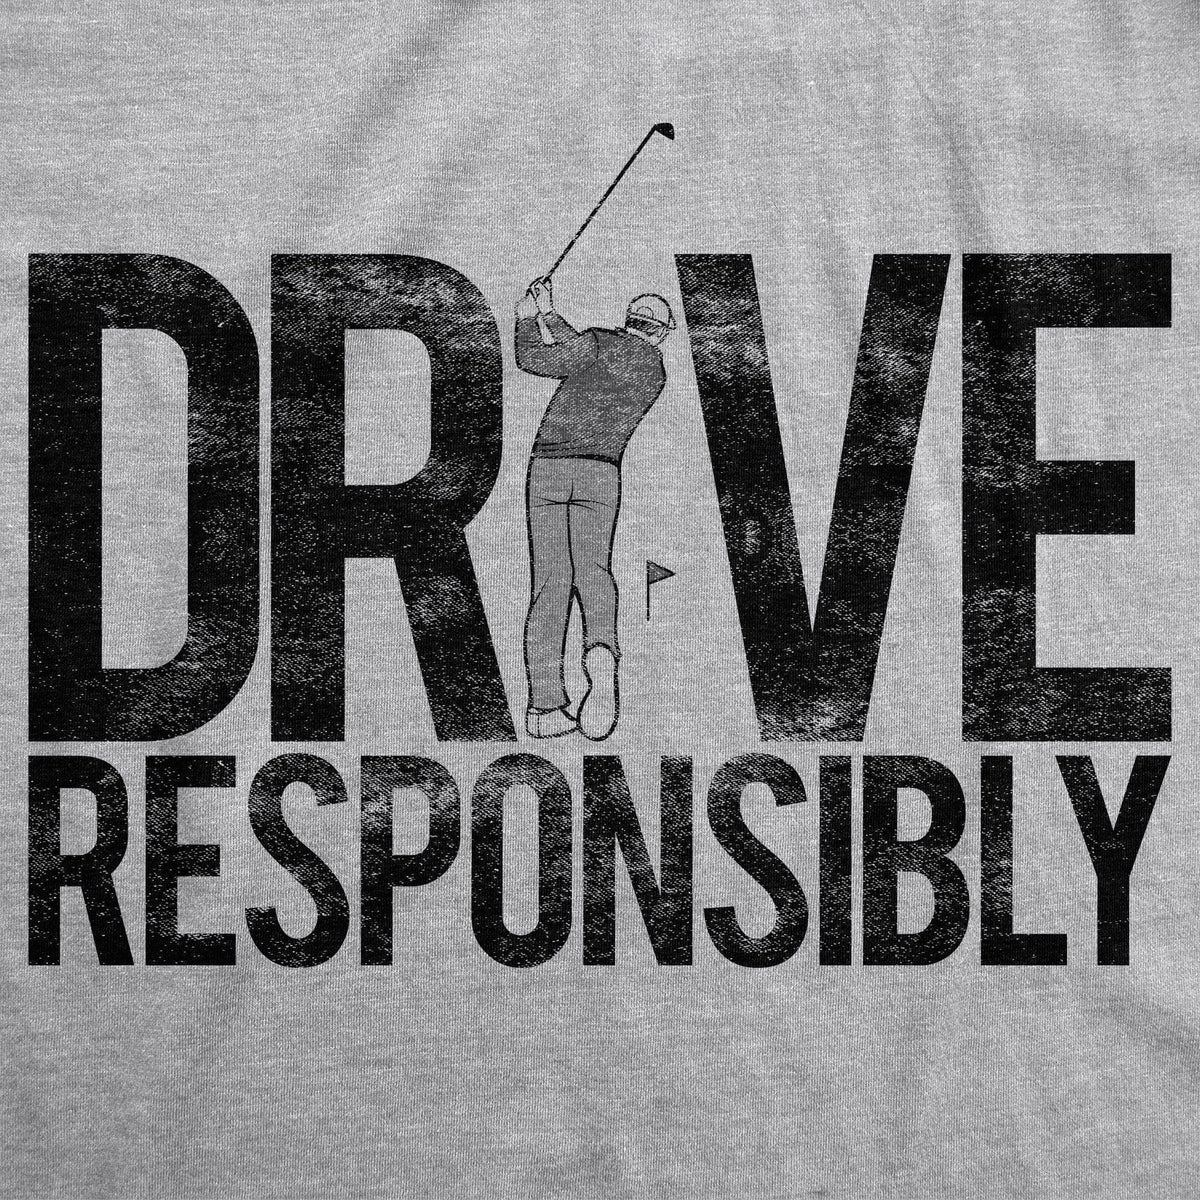 Drive Responsibly Men&#39;s Tshirt - Crazy Dog T-Shirts